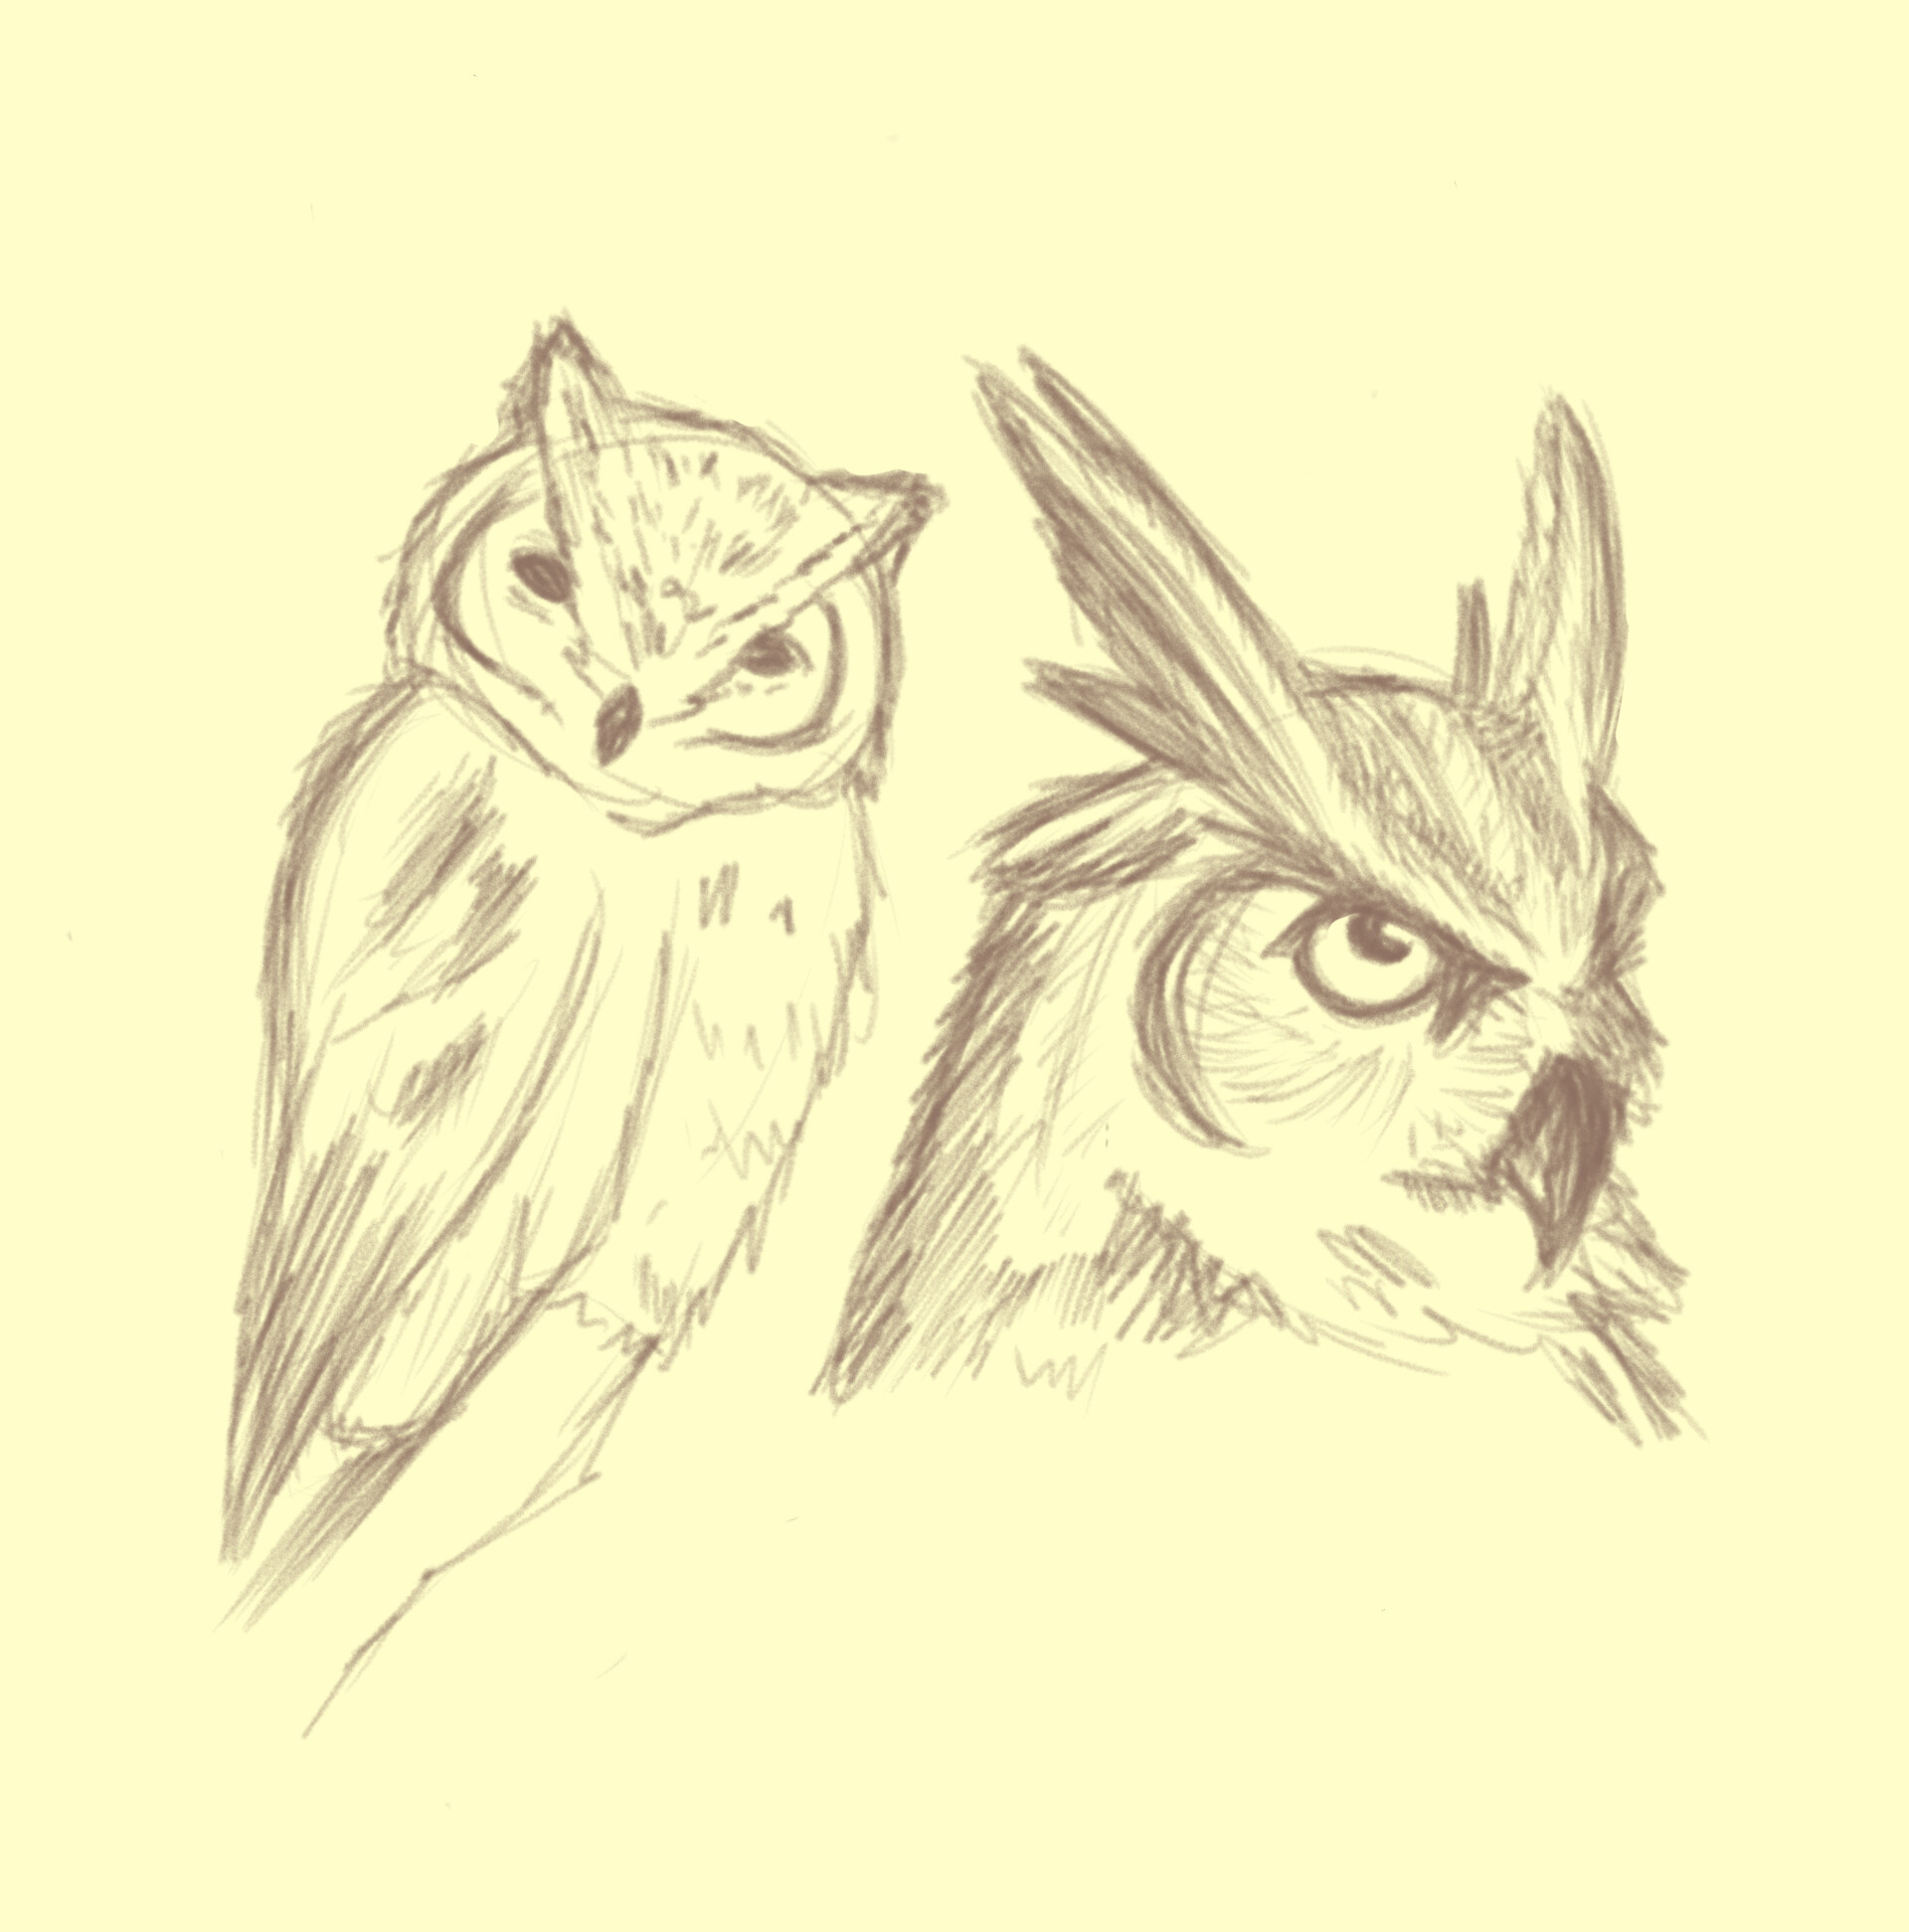 ArtStation - Owl sketch